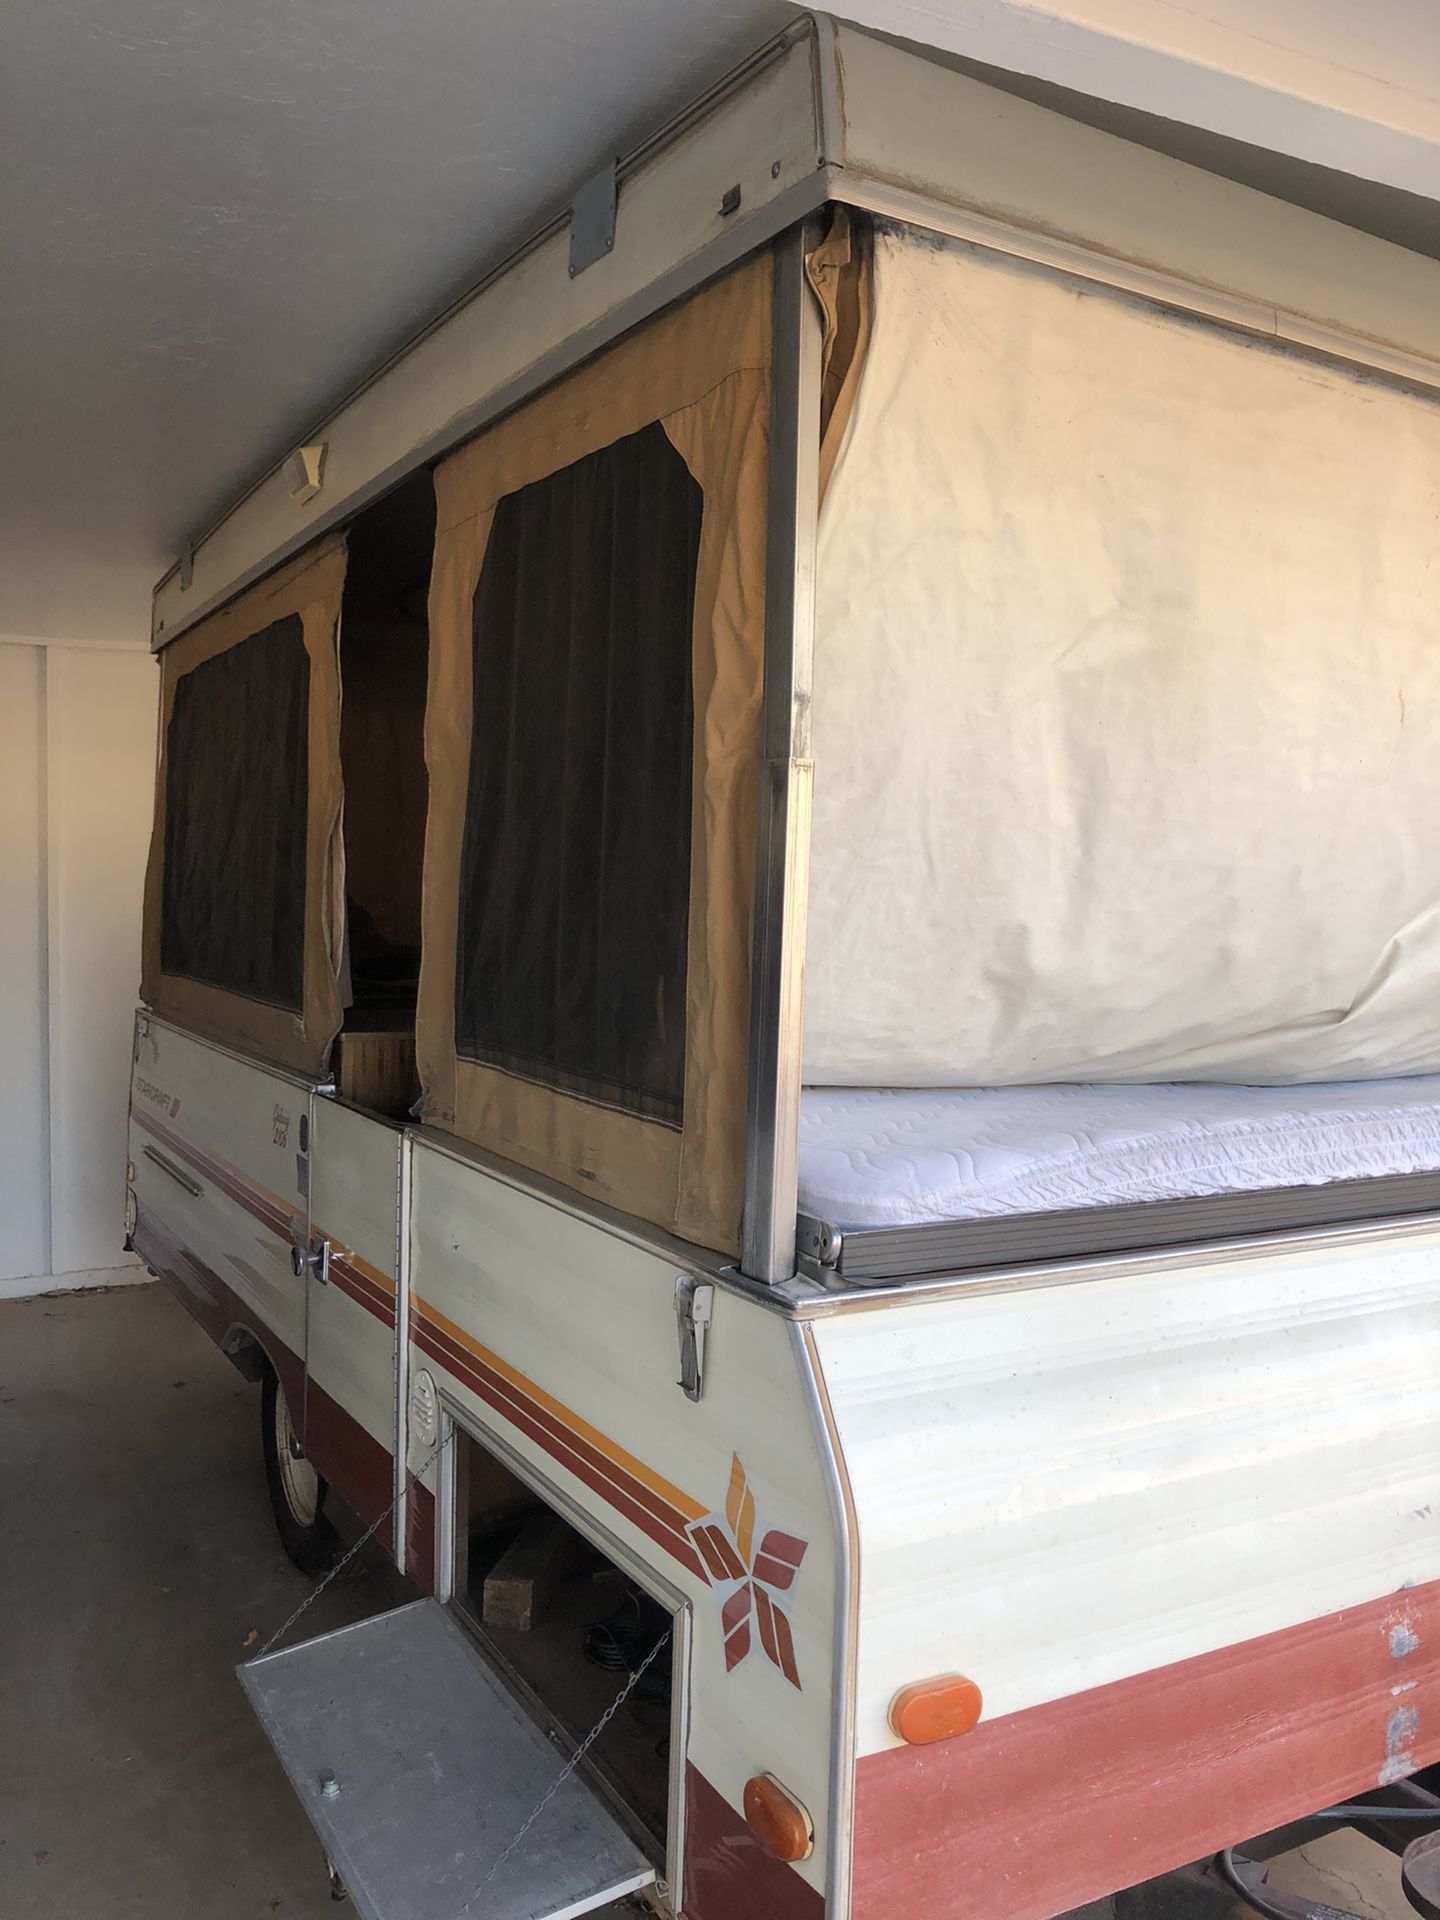 1981 popup camper travel trailer